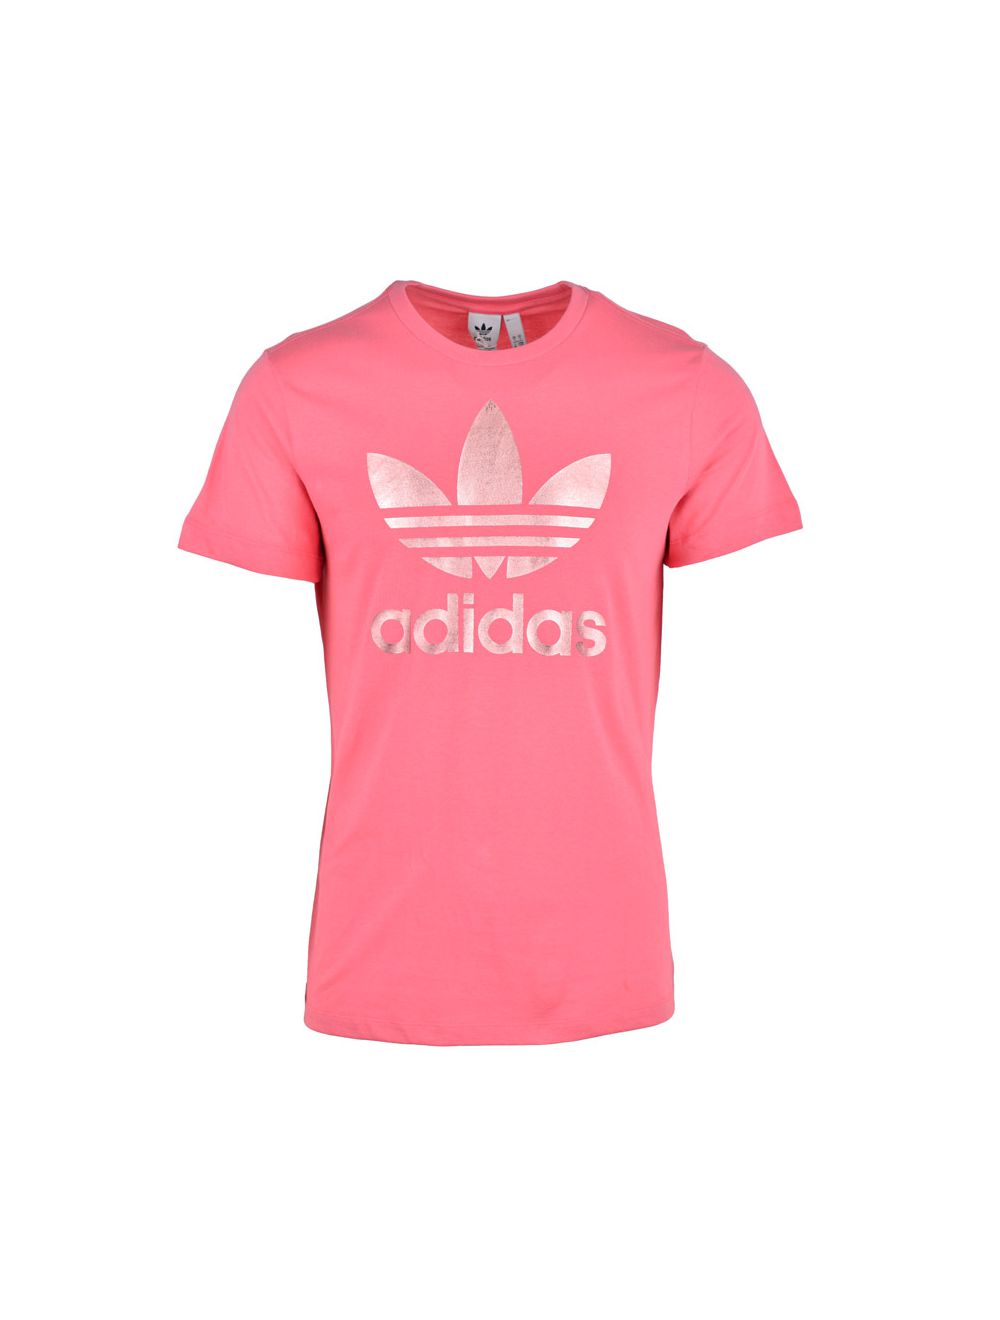 adidas Originals Boyfriend T-shirt Womens Rose Pink